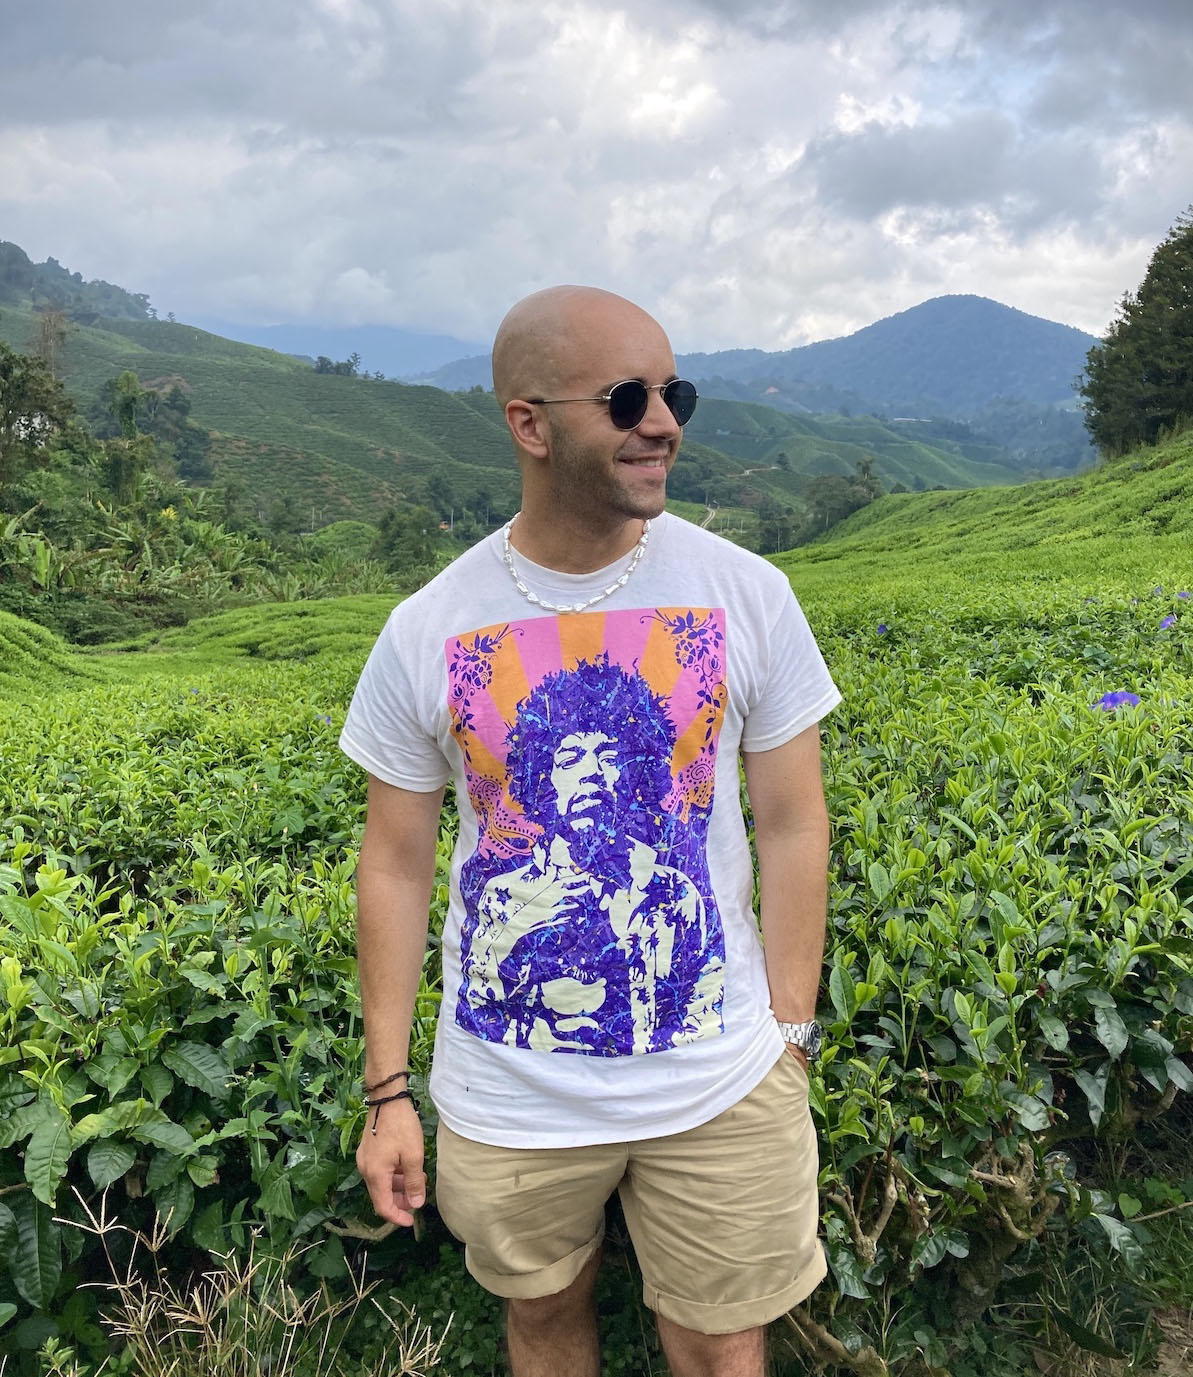 Jimi Hendrix pop art painting t-shirt in Malaysia | By Kerwin | Jimi Hendrix merchandise